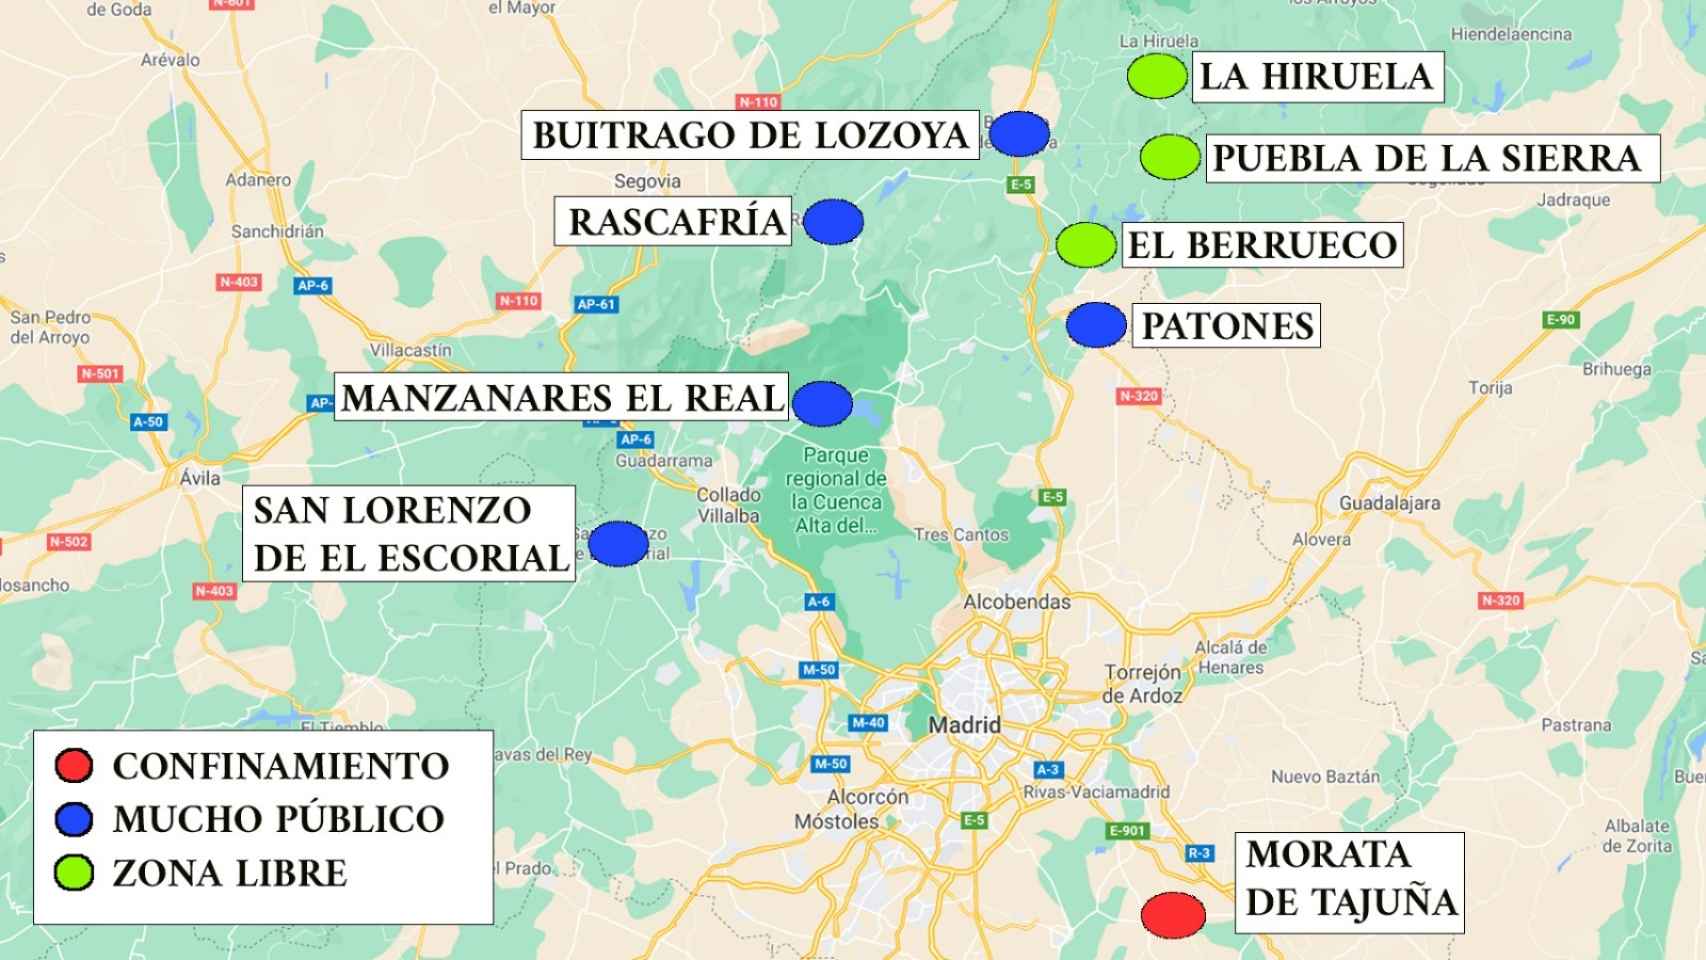 El mapa de la Sierra de Madrid.